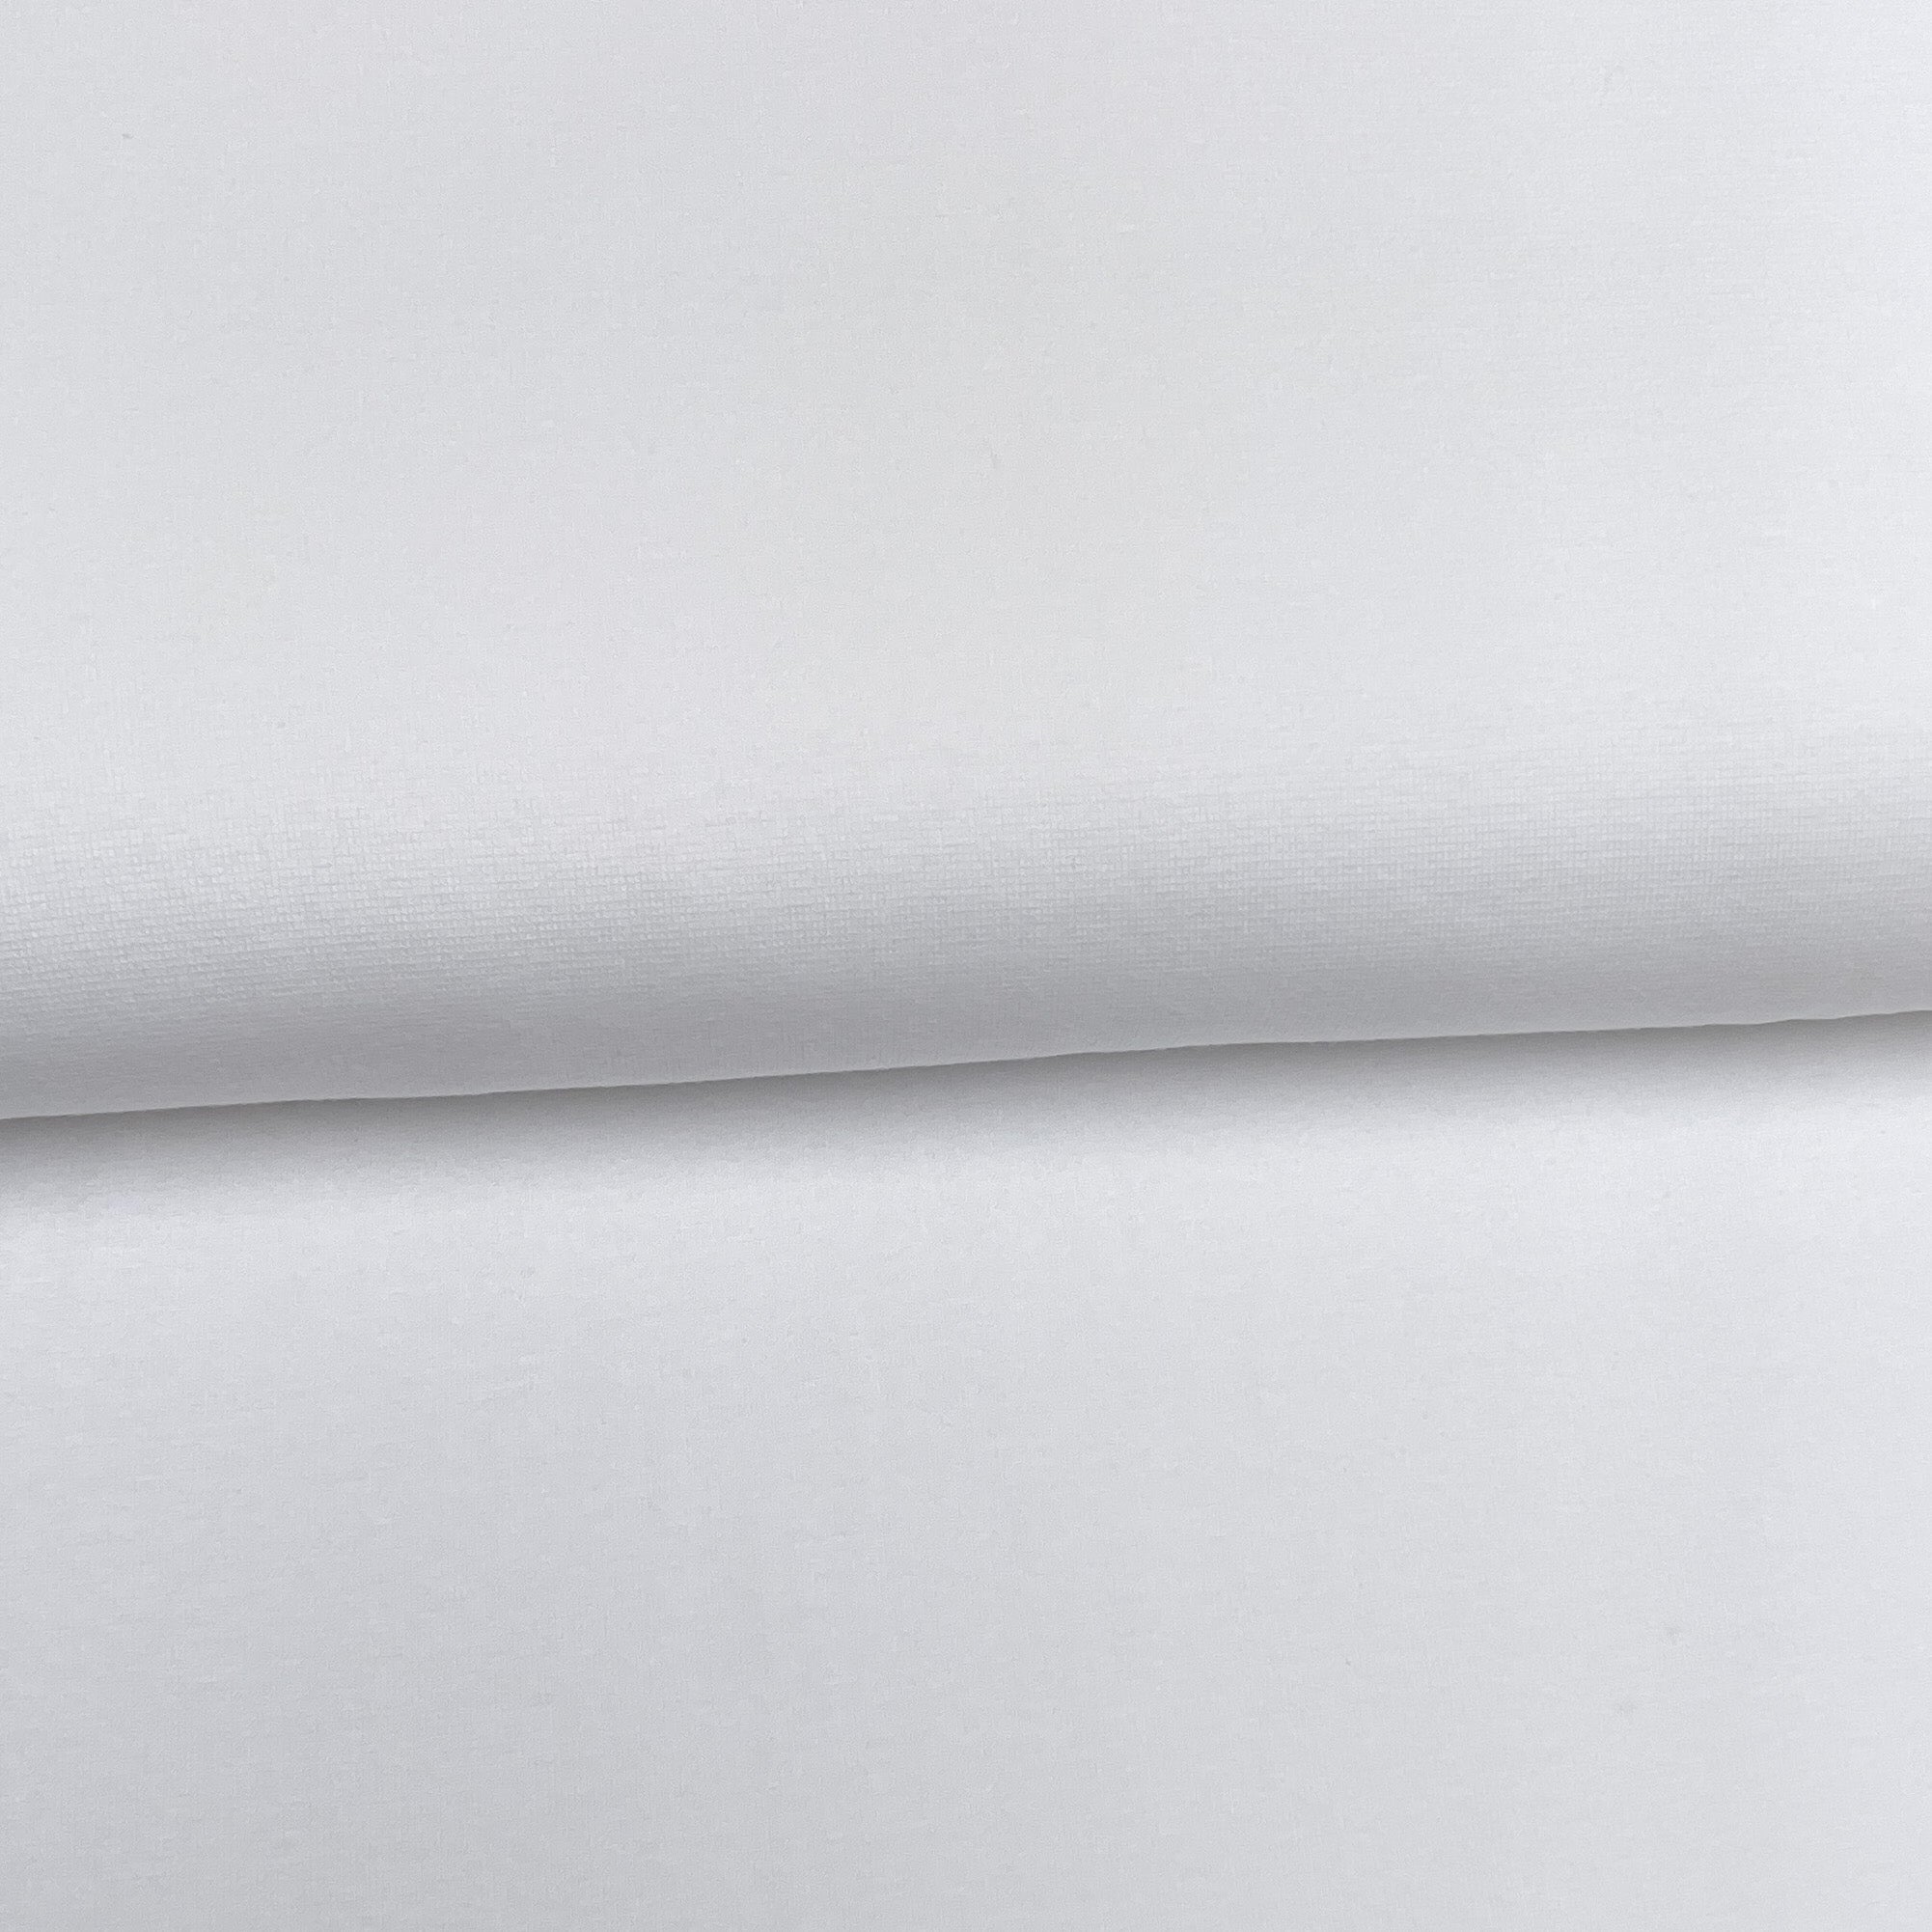 Fin de rouleau 31 cm - Blanc - Bord côte (ribbing)